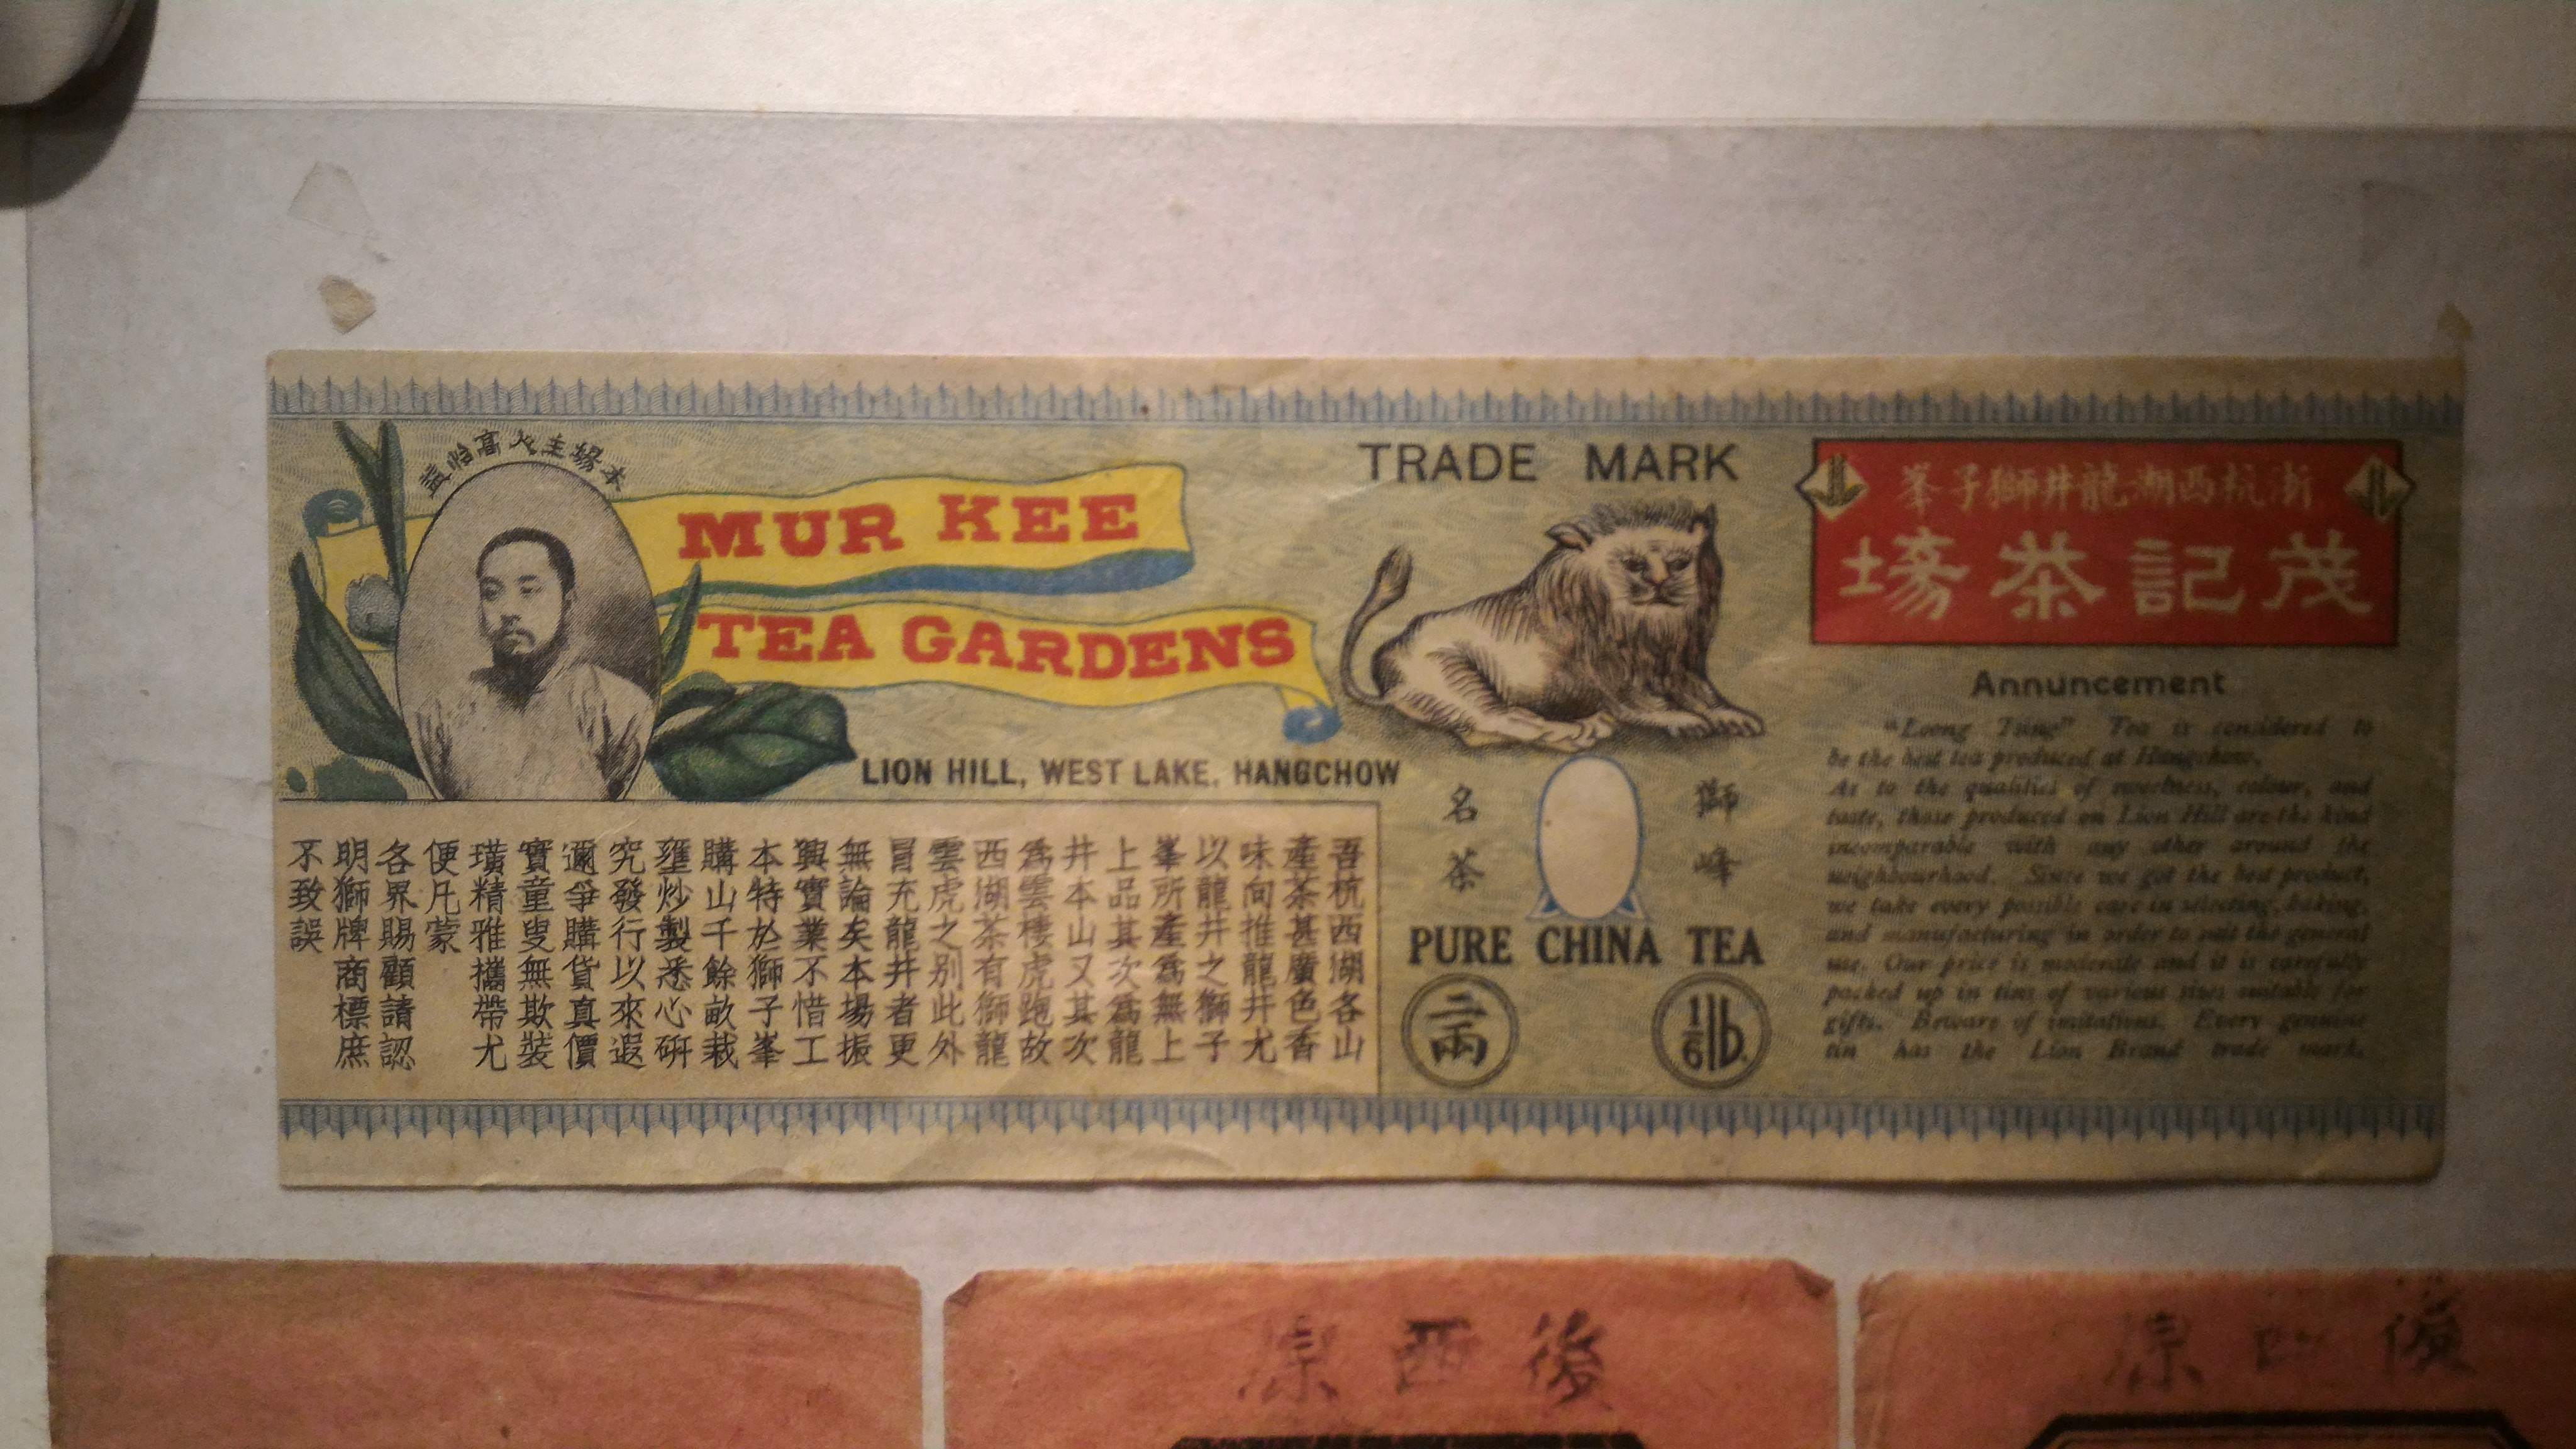 Historic tea garden advertisement